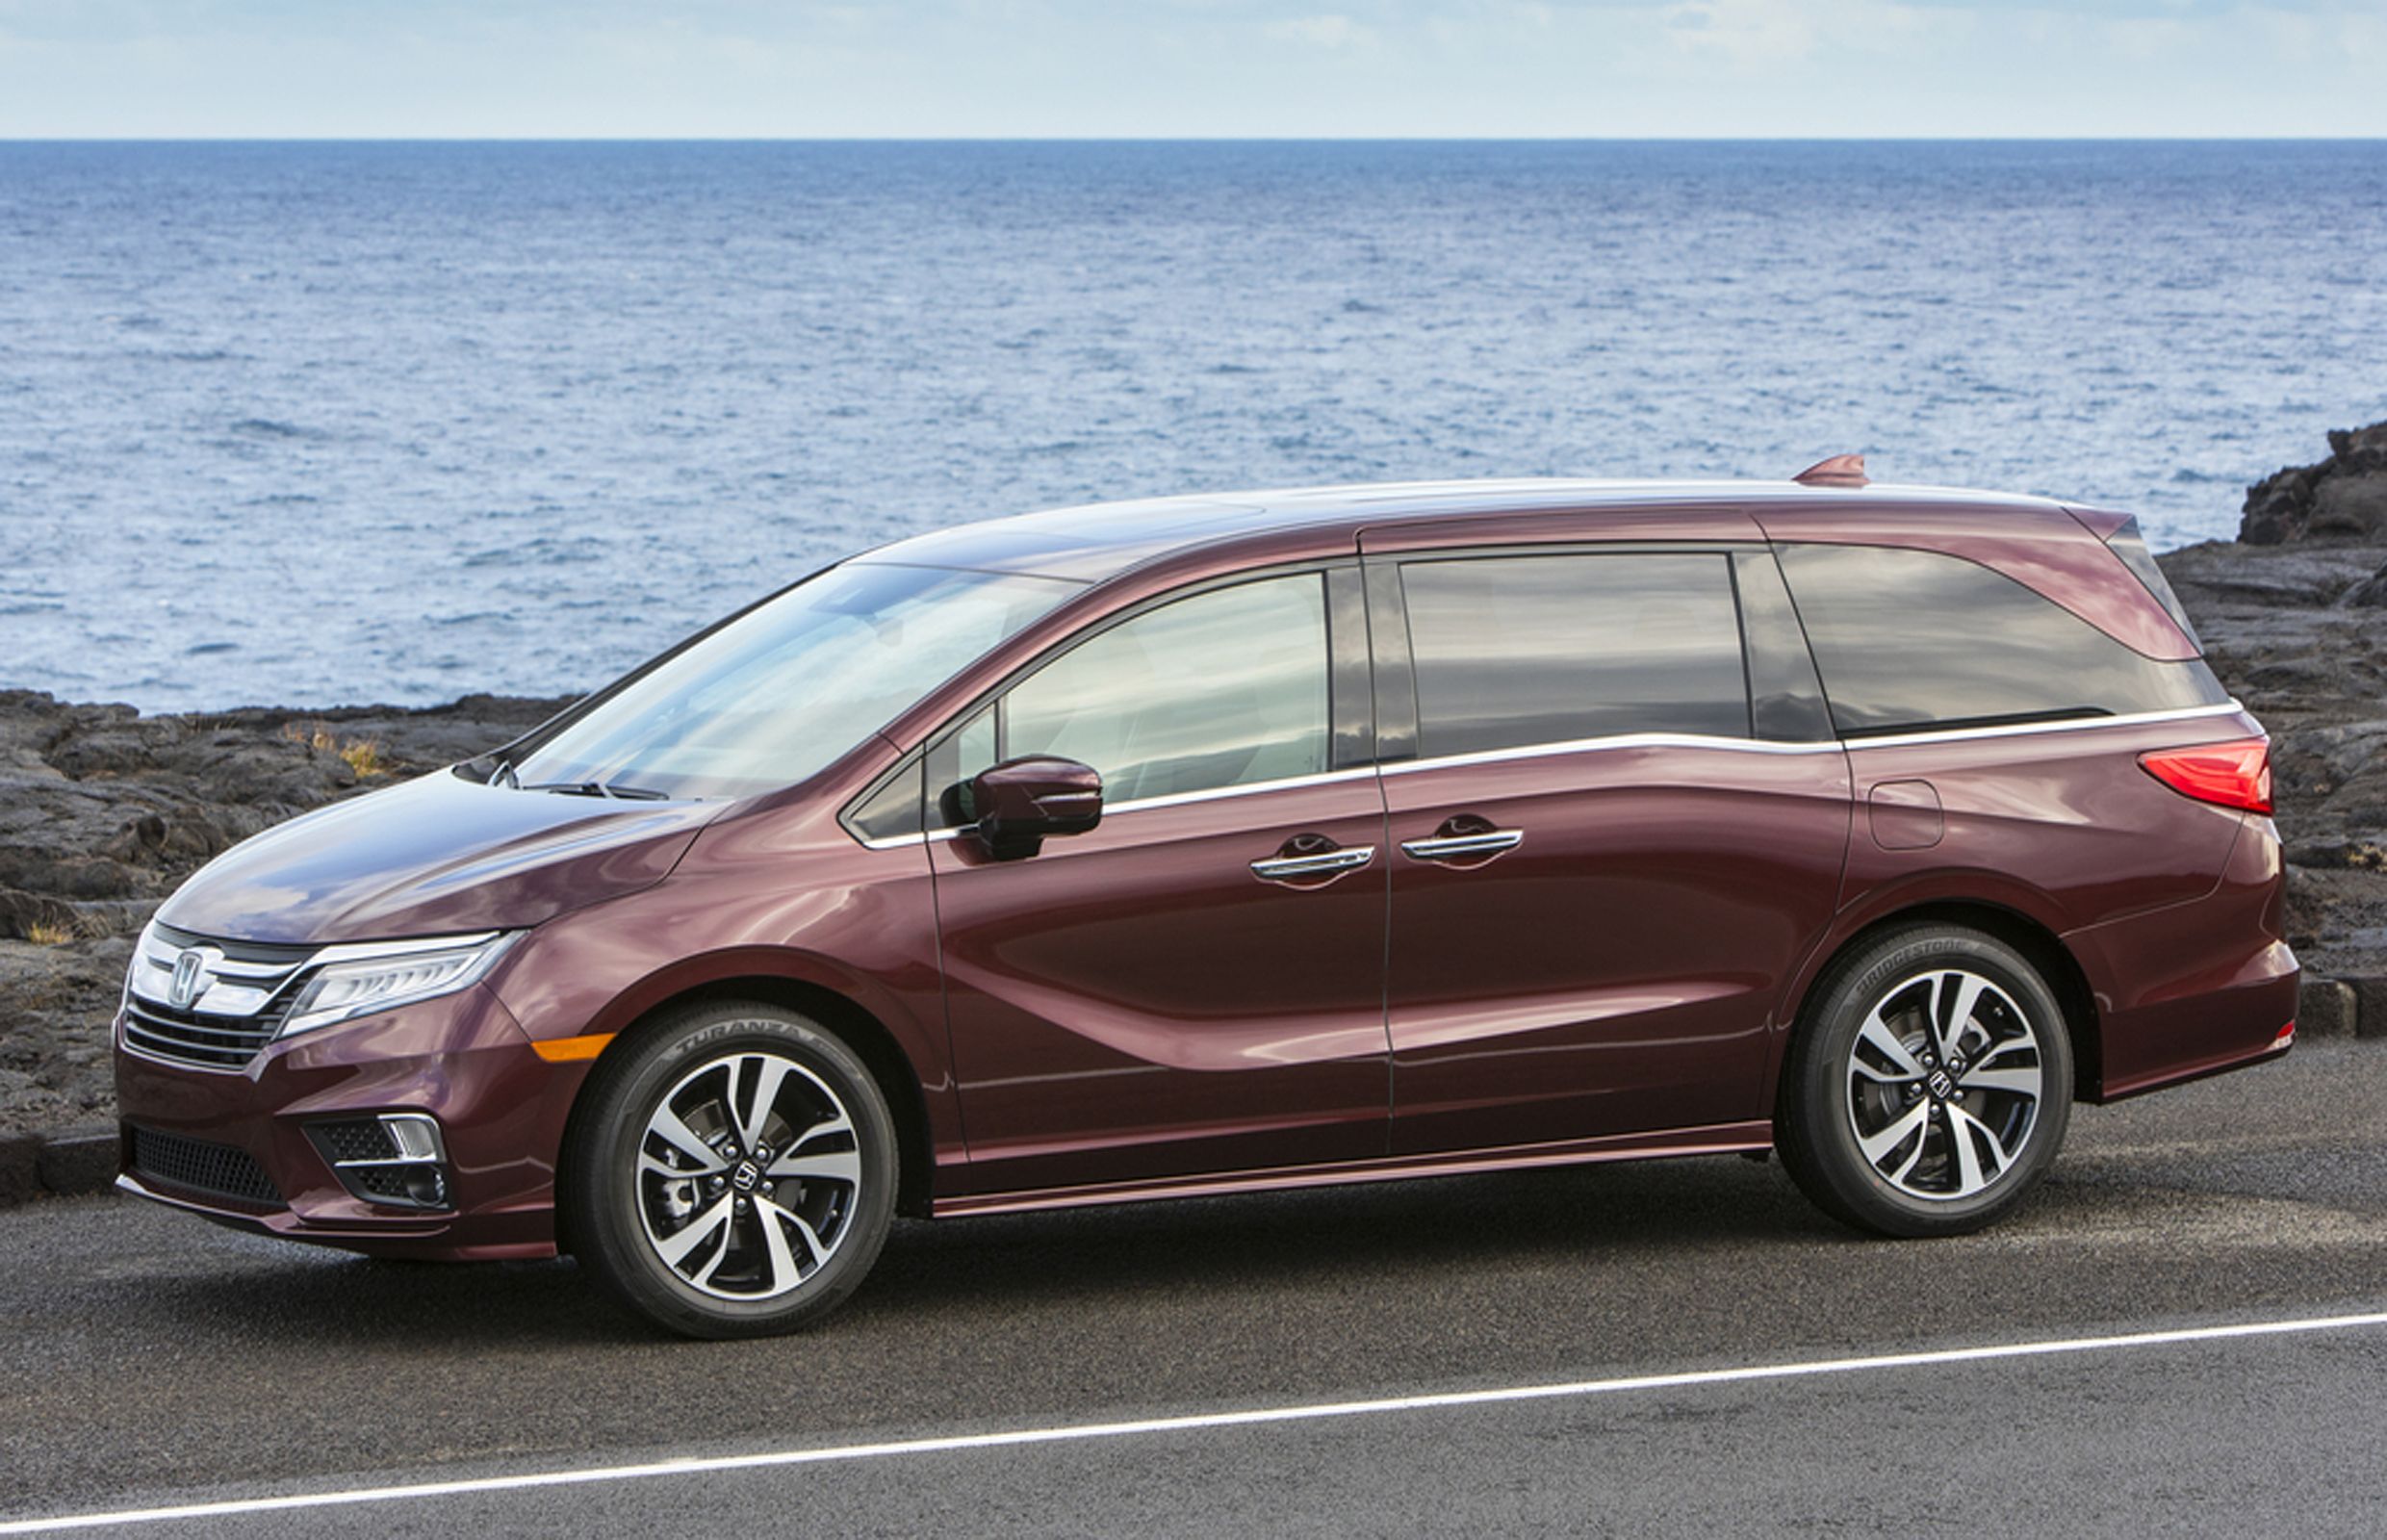 Honda recalls 53,770 Odyssey minivans, Passport and Pilot SUVs in